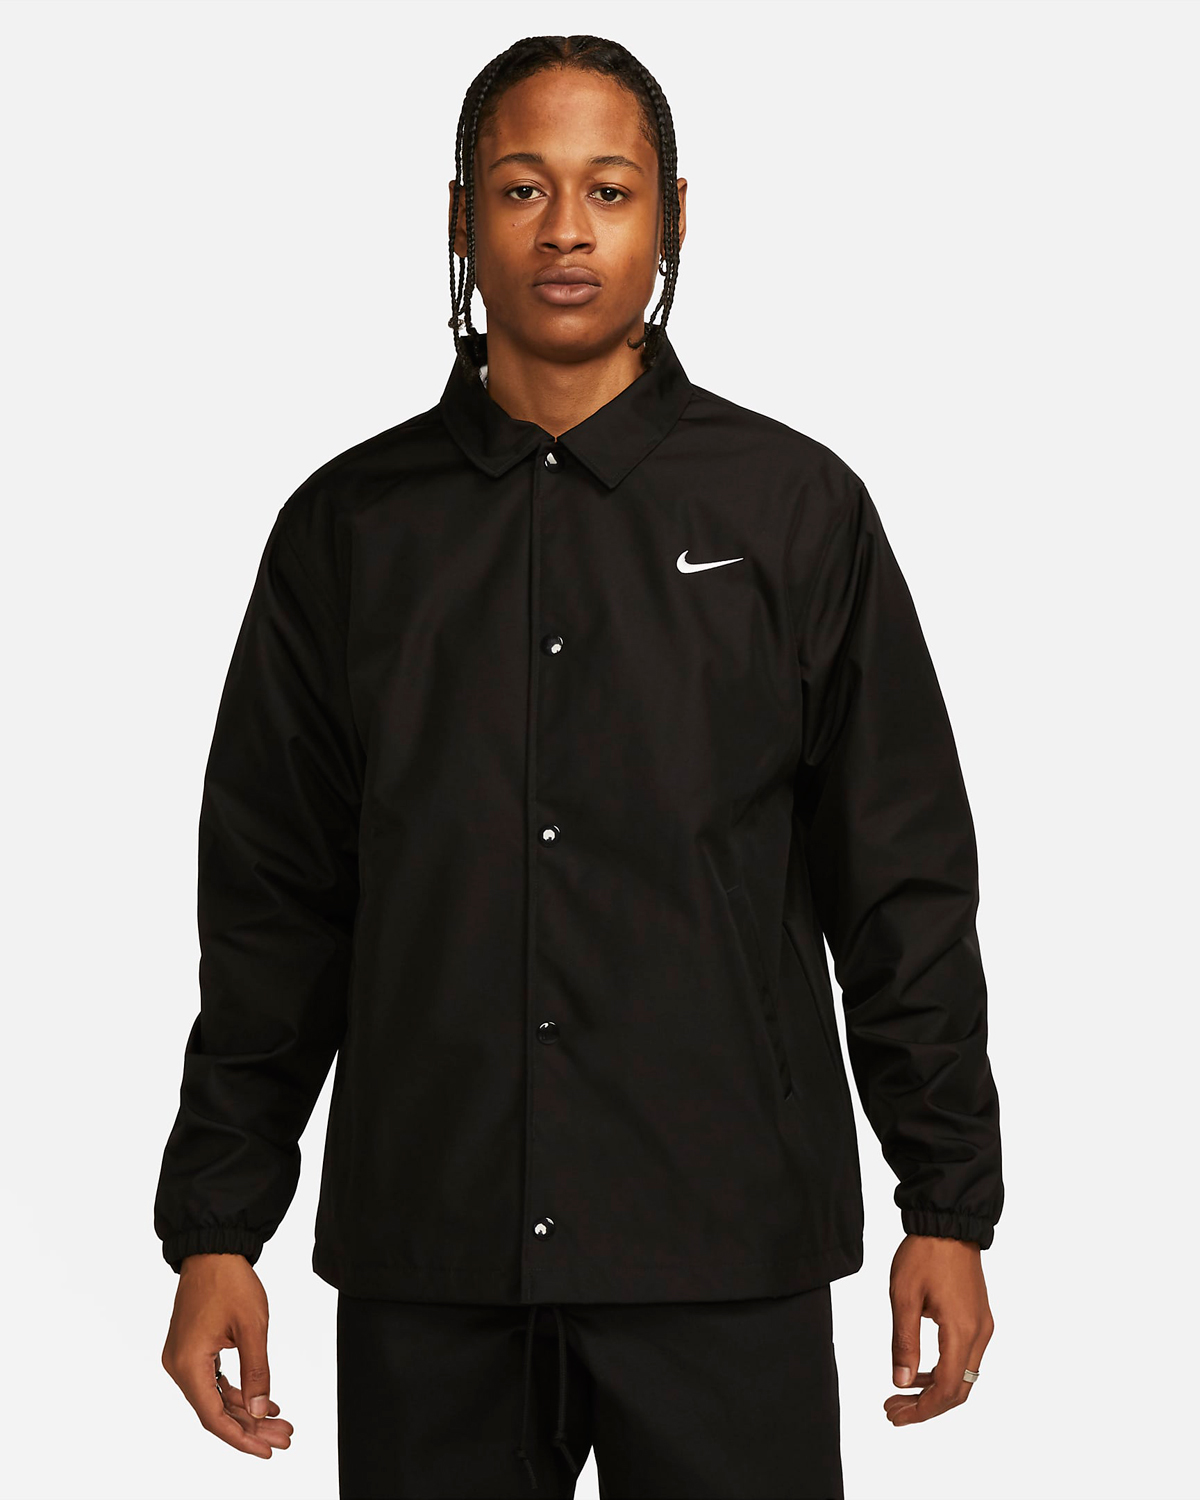 Nike-Authentics-Coaches-Jacket-Black-White